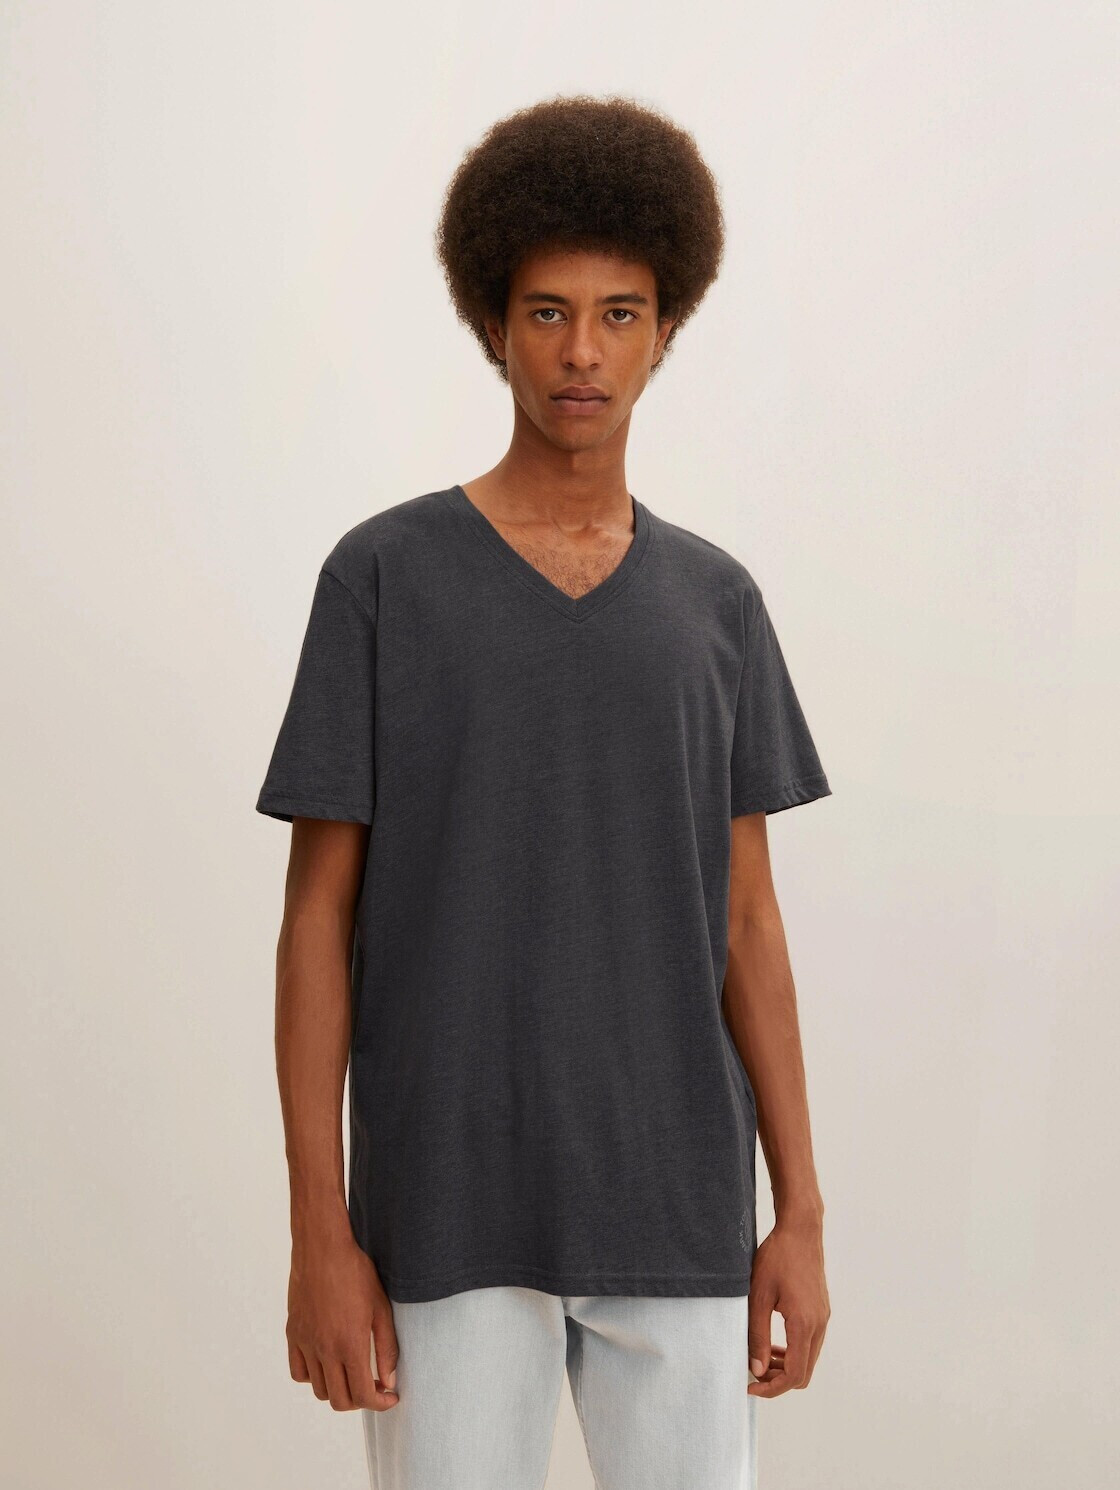 Tom Tailor Doppelpack T-Shirt (1008639) dark grey melange ab 12,00 € |  Preisvergleich bei